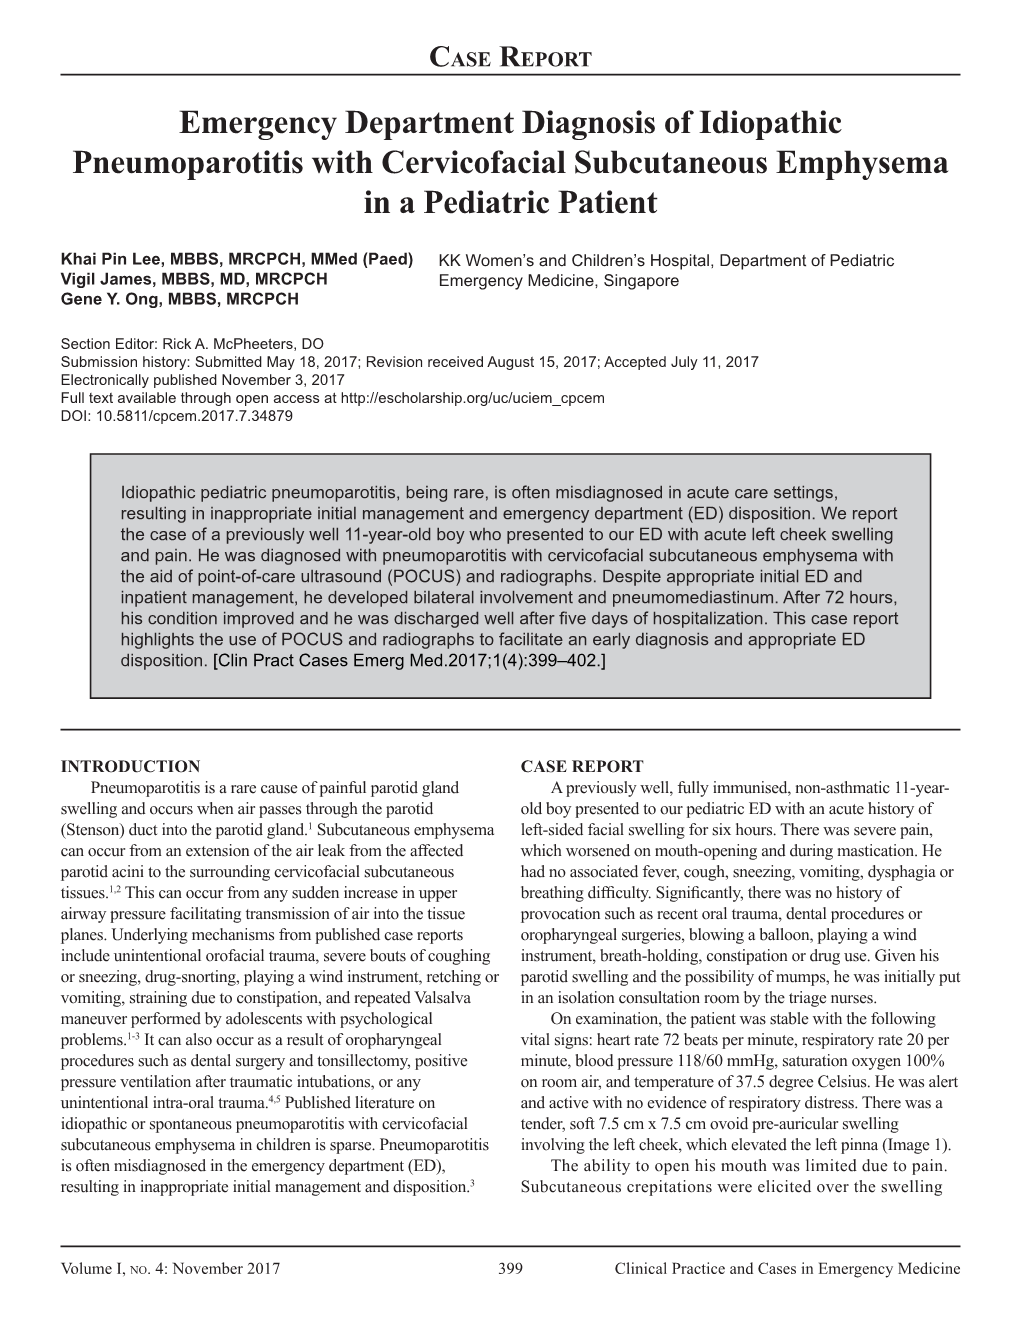 Emergency Department Diagnosis of Idiopathic Pneumoparotitis with Cervicofacial Subcutaneous Emphysema in a Pediatric Patient